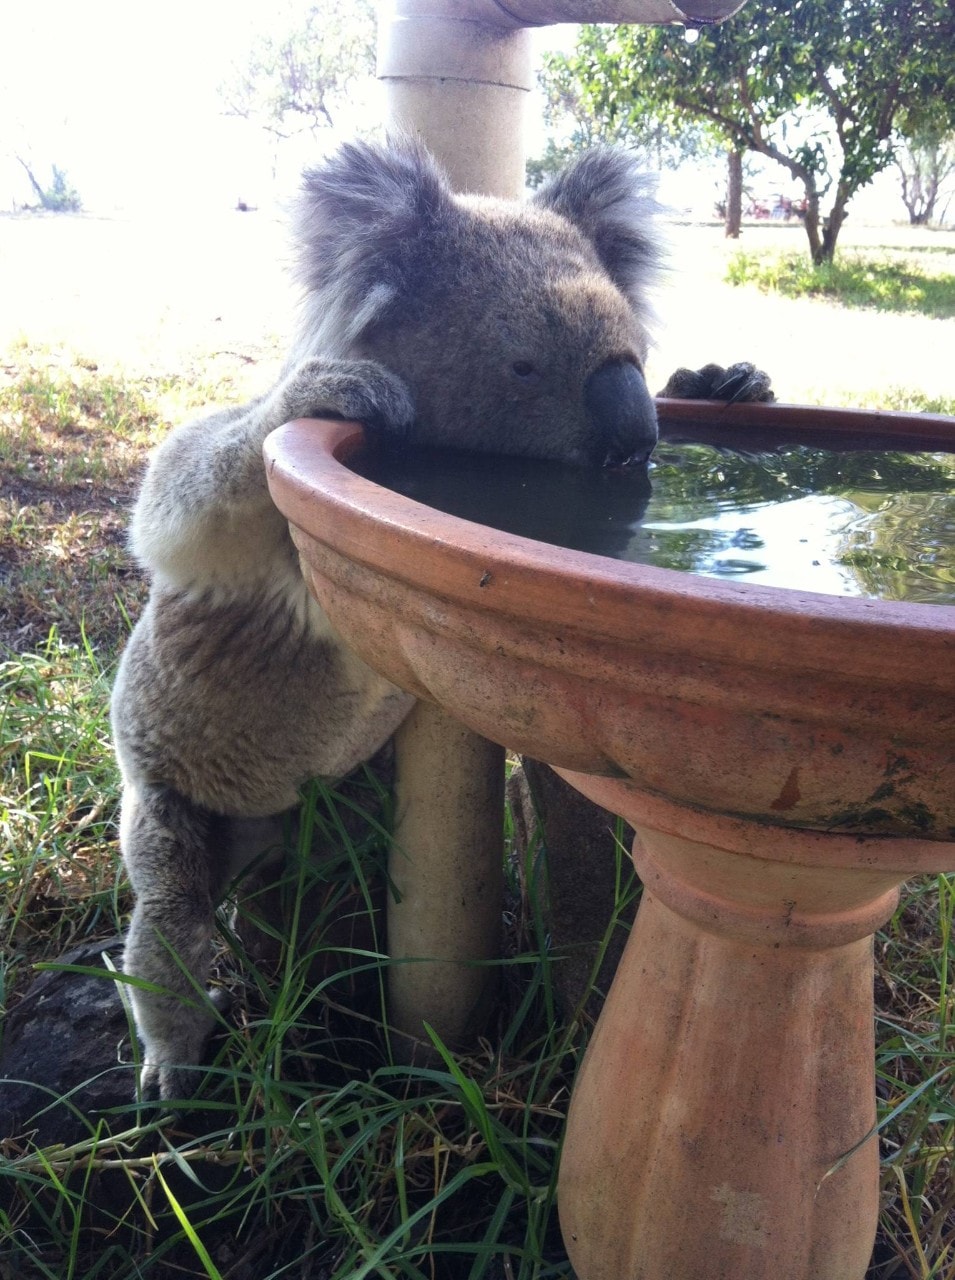 Koalas will supplement their water needs from drinking stations - or bird baths.